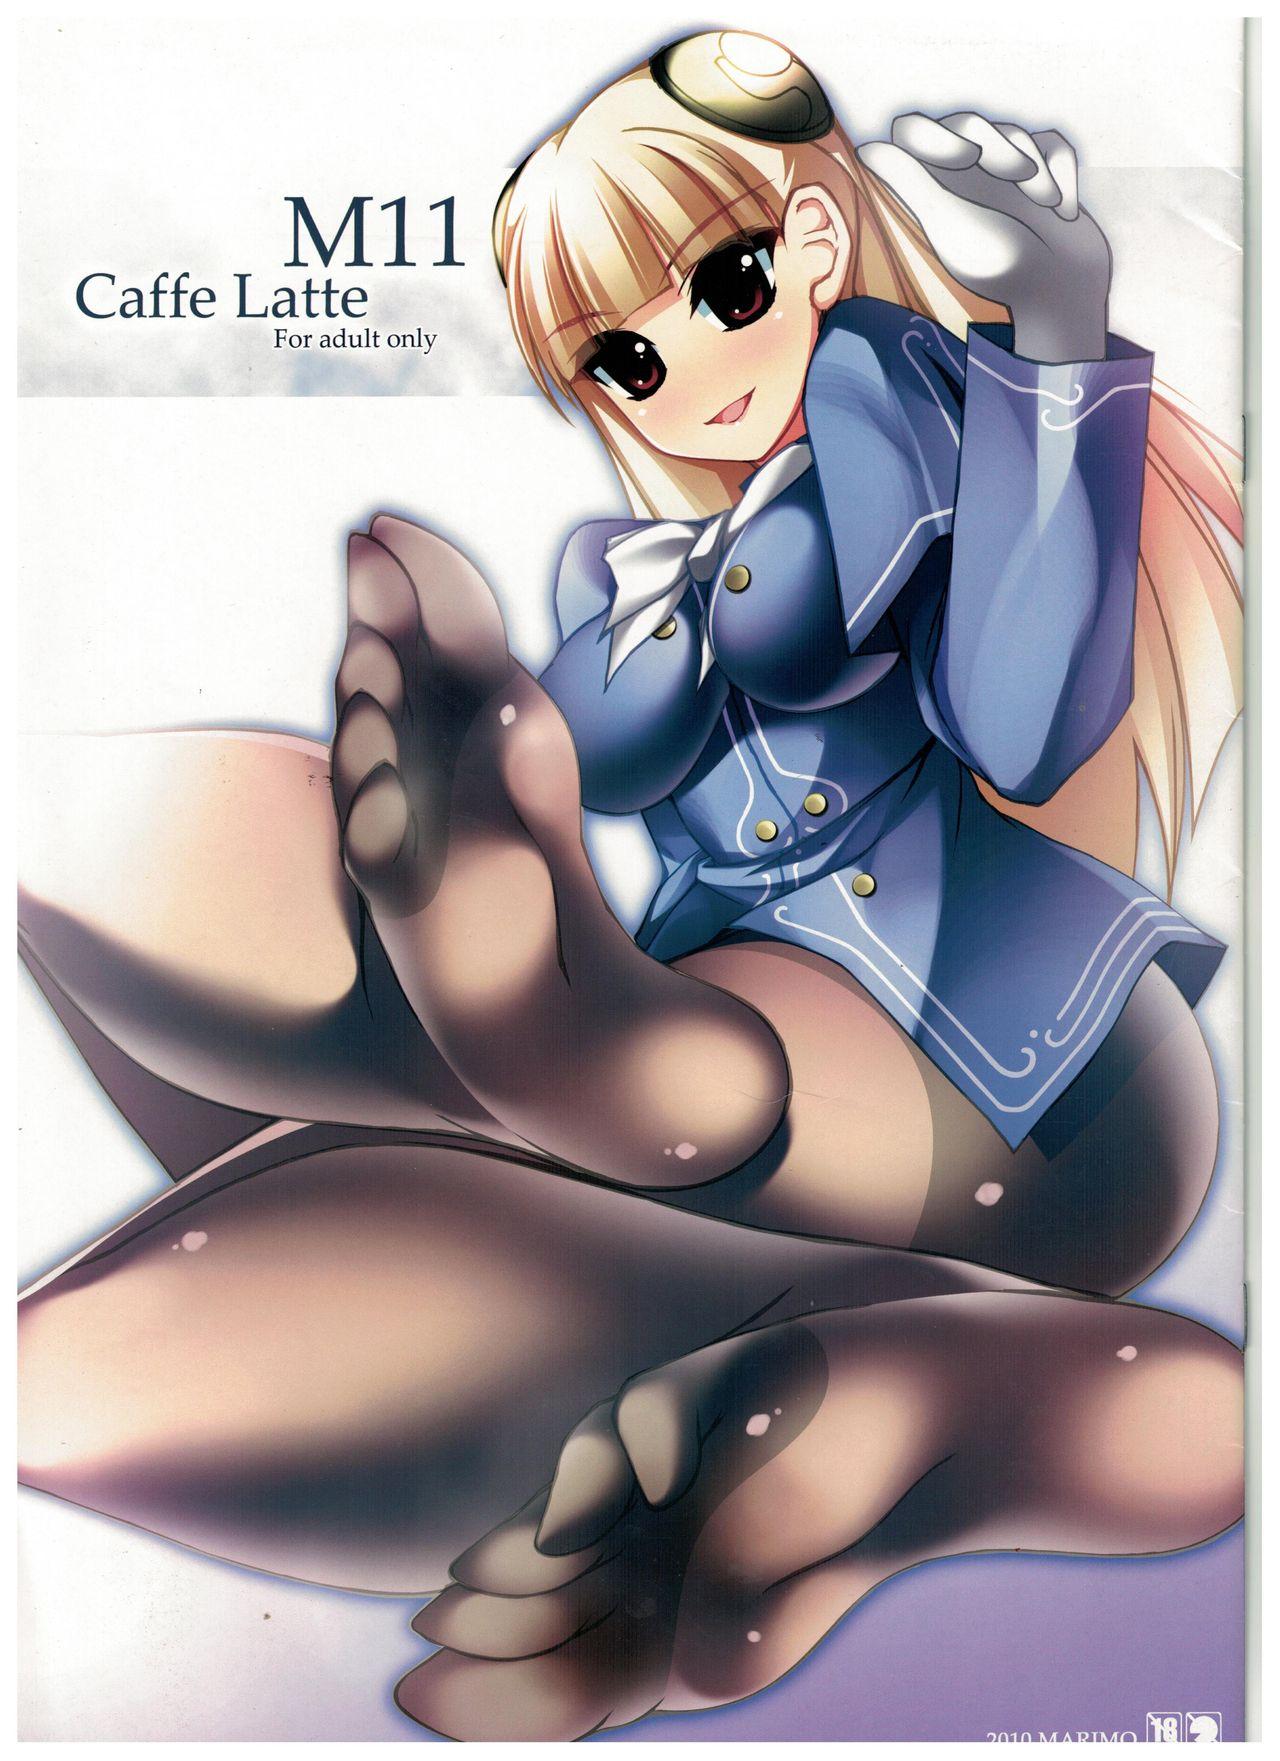 Caffe Latte M11 0